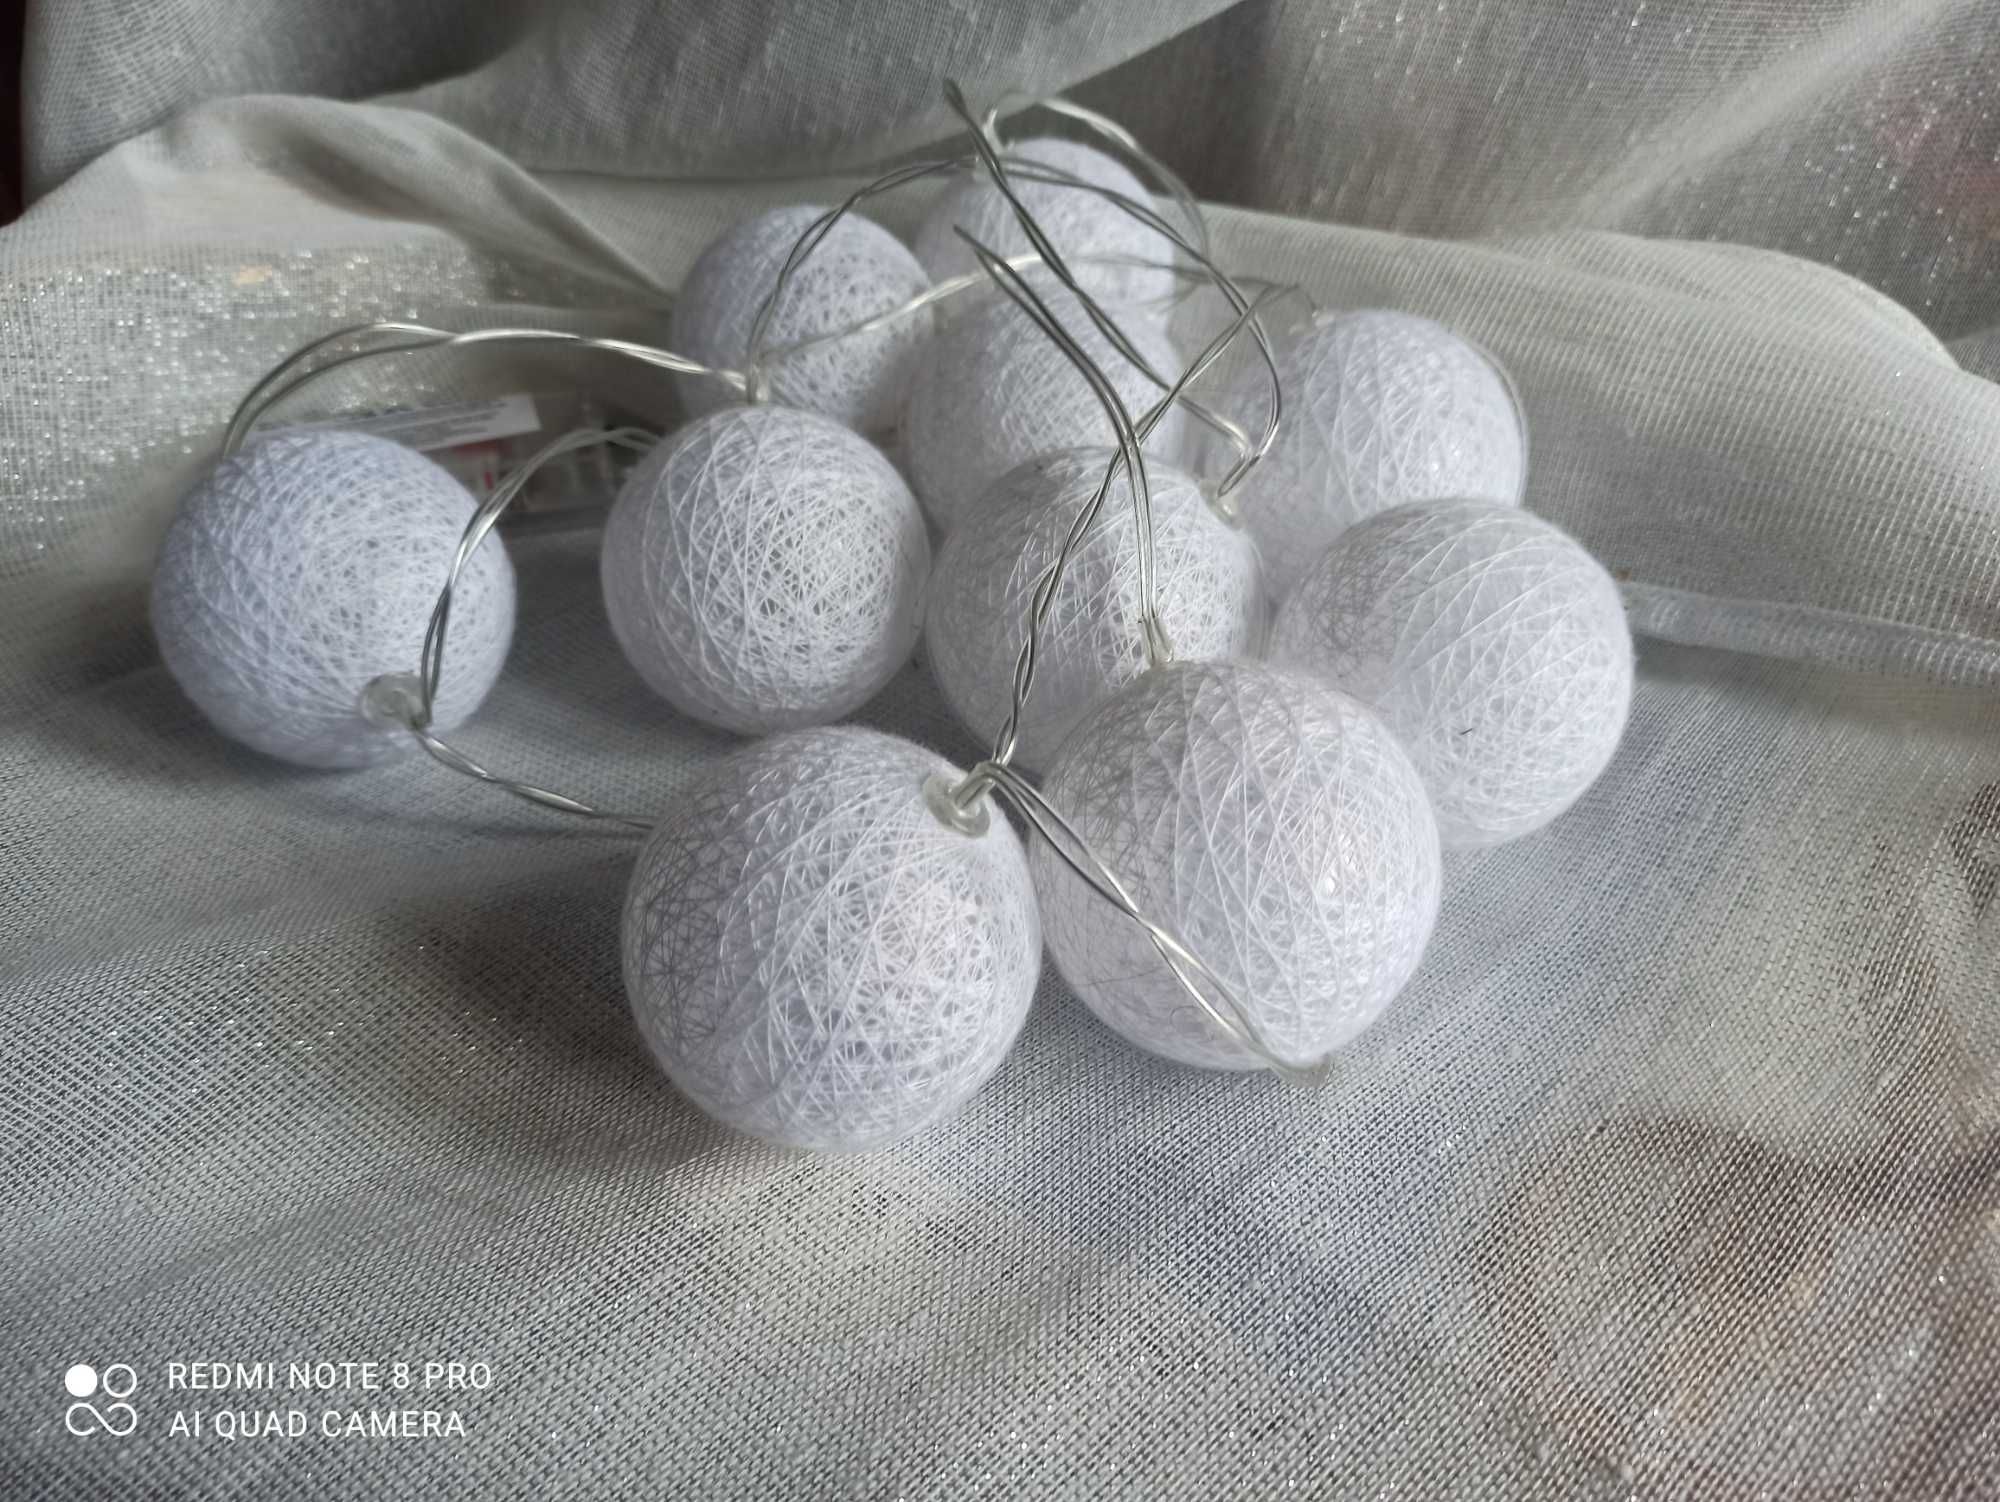 Cotton balls białe kule oświetlenie